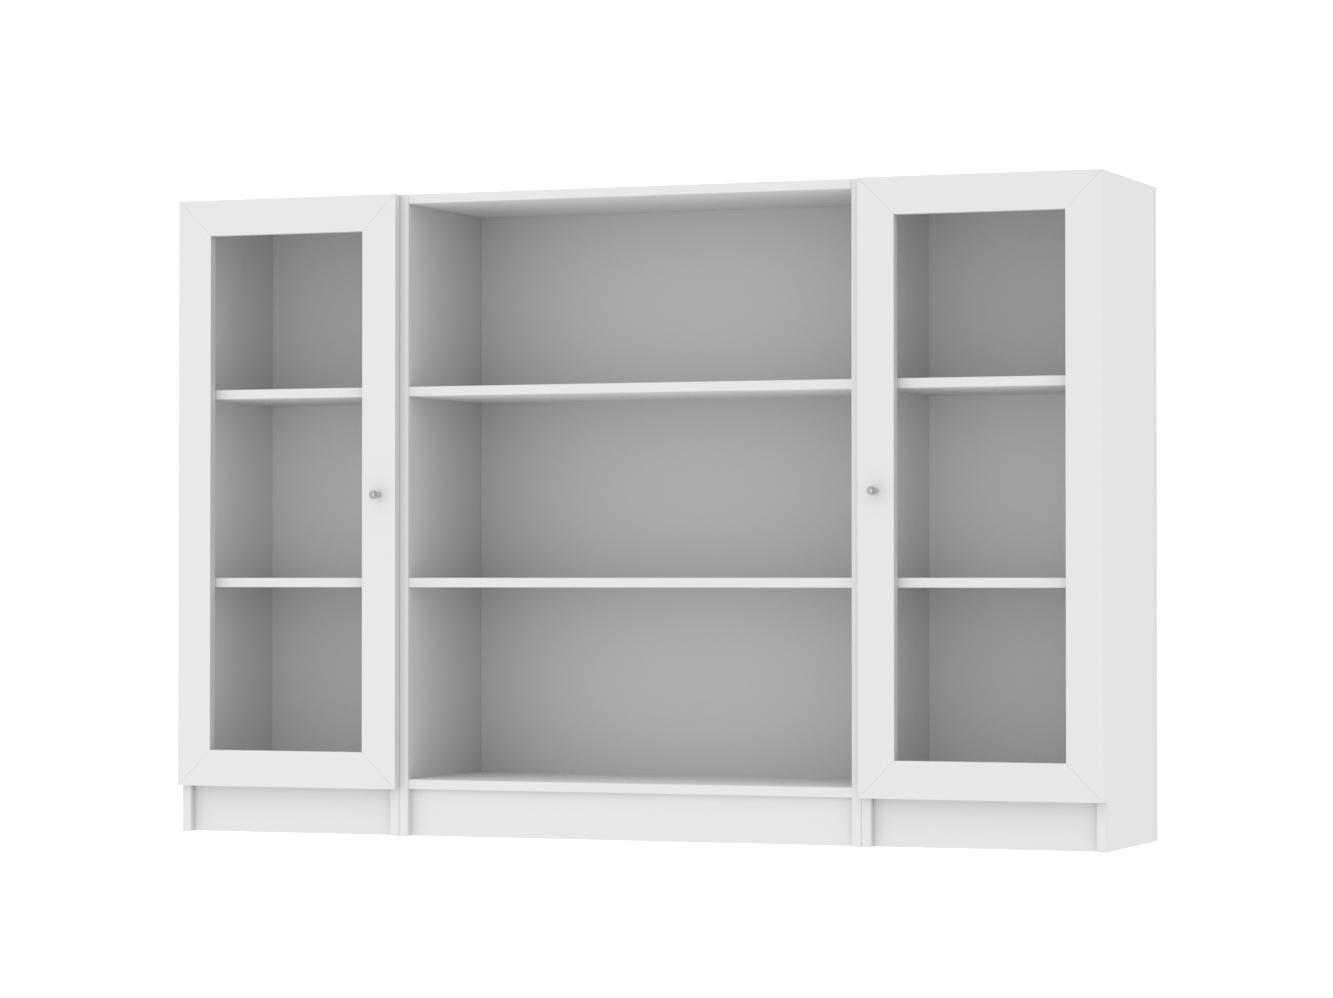  Книжный шкаф Билли 420 white ИКЕА (IKEA) изображение товара